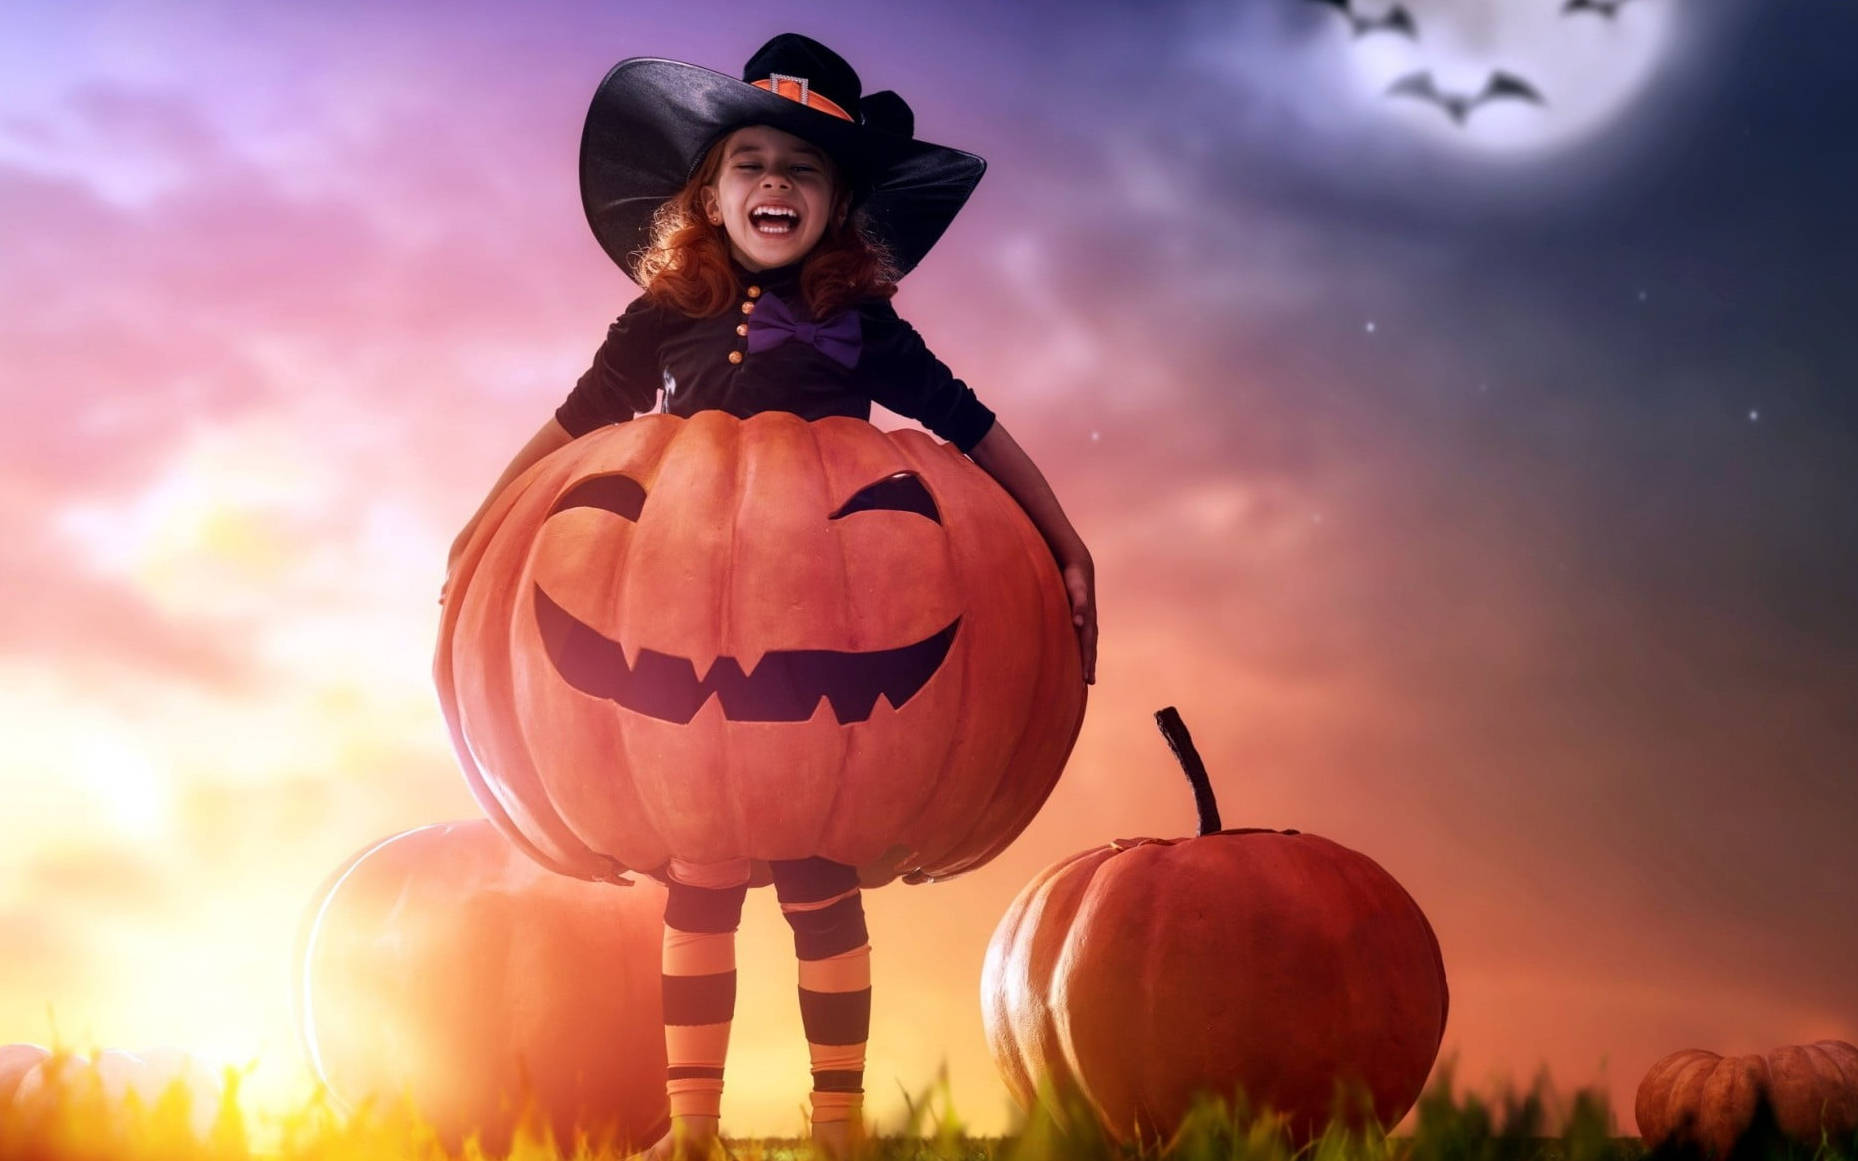 Cute Halloween Girl Laughing Wallpaper